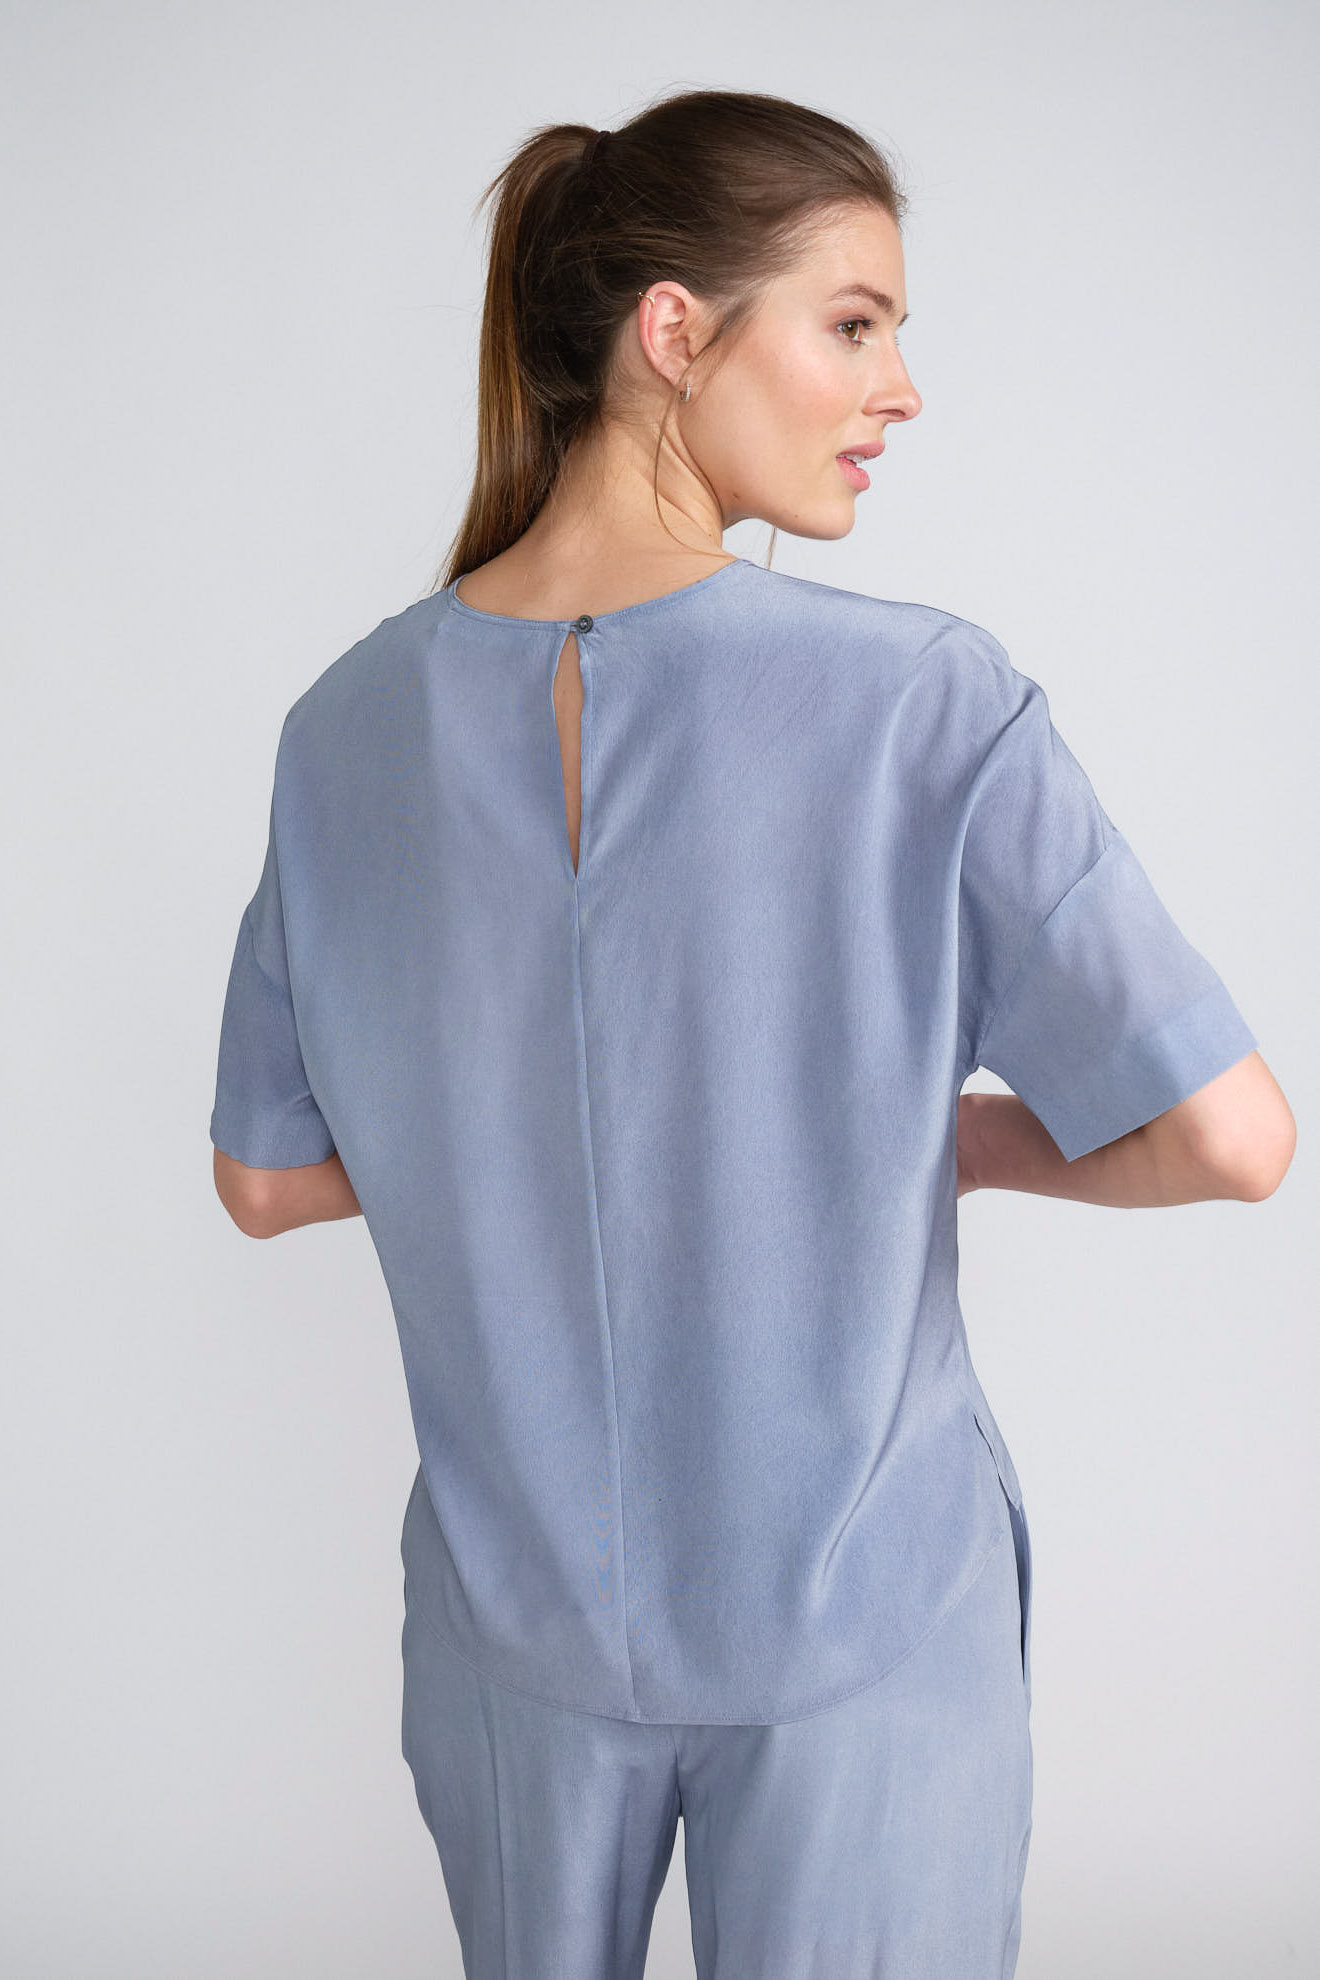 iris von Arnim blouse blue plain silk model back